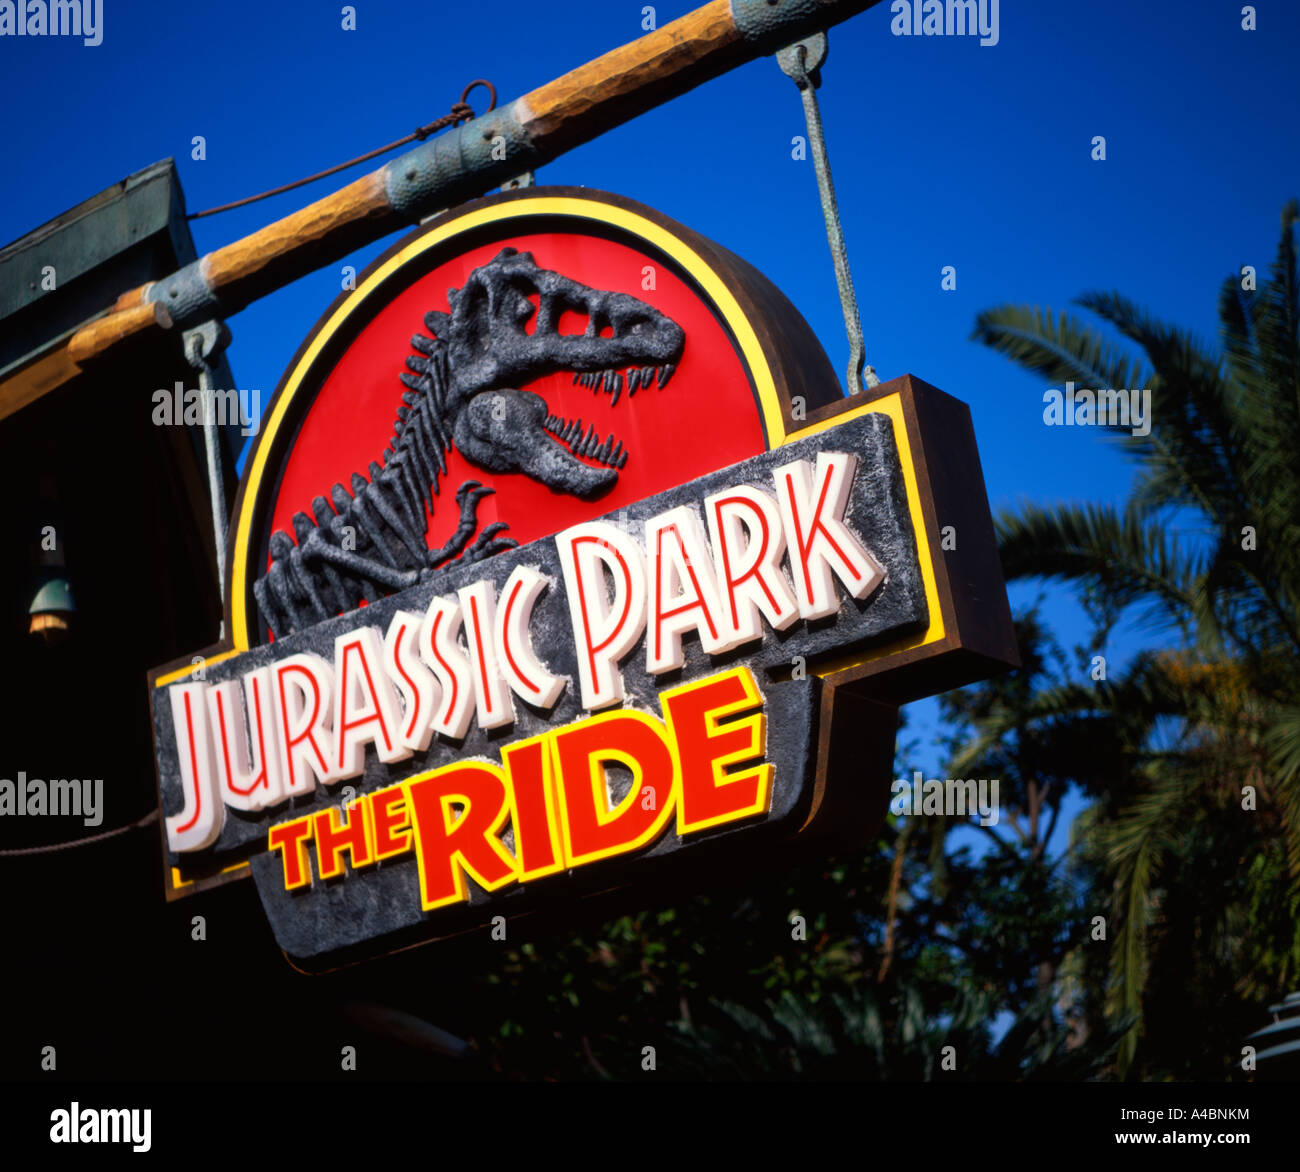 Jurassic Park Universal Studios Japan